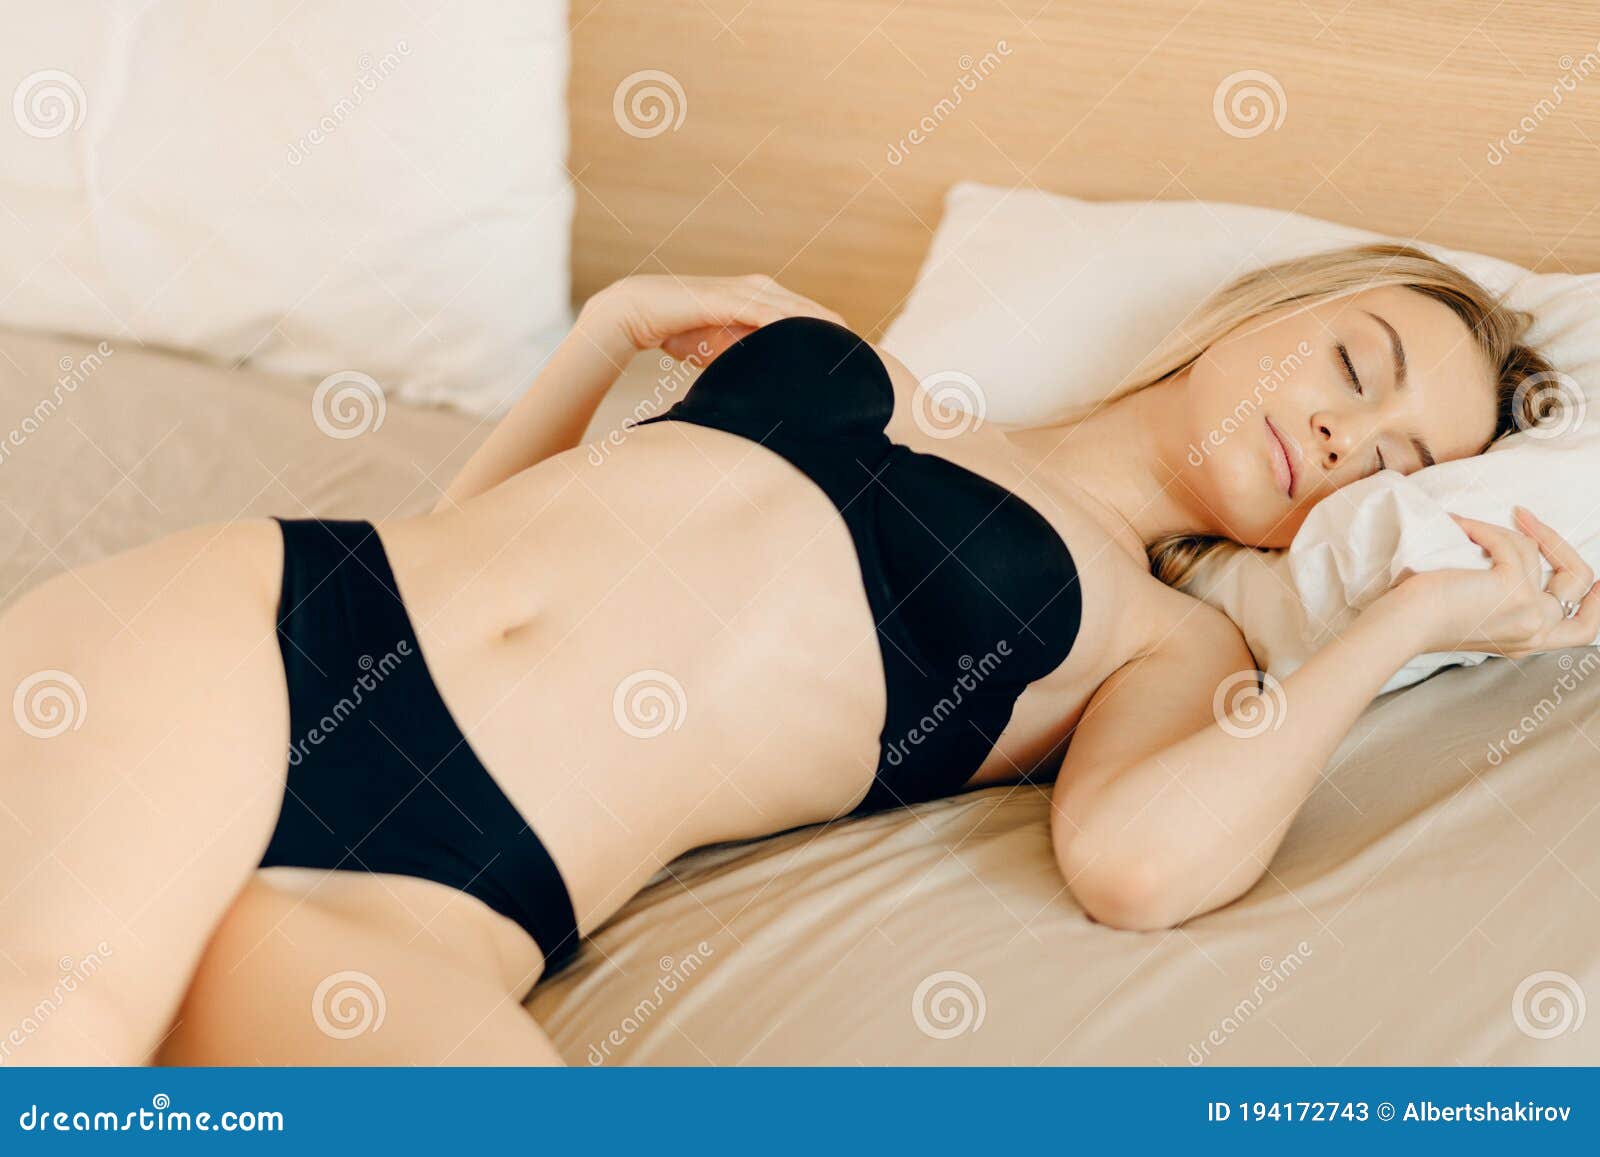 Beautiful Blonde Woman Posing On The Bed In Black Thong Panties